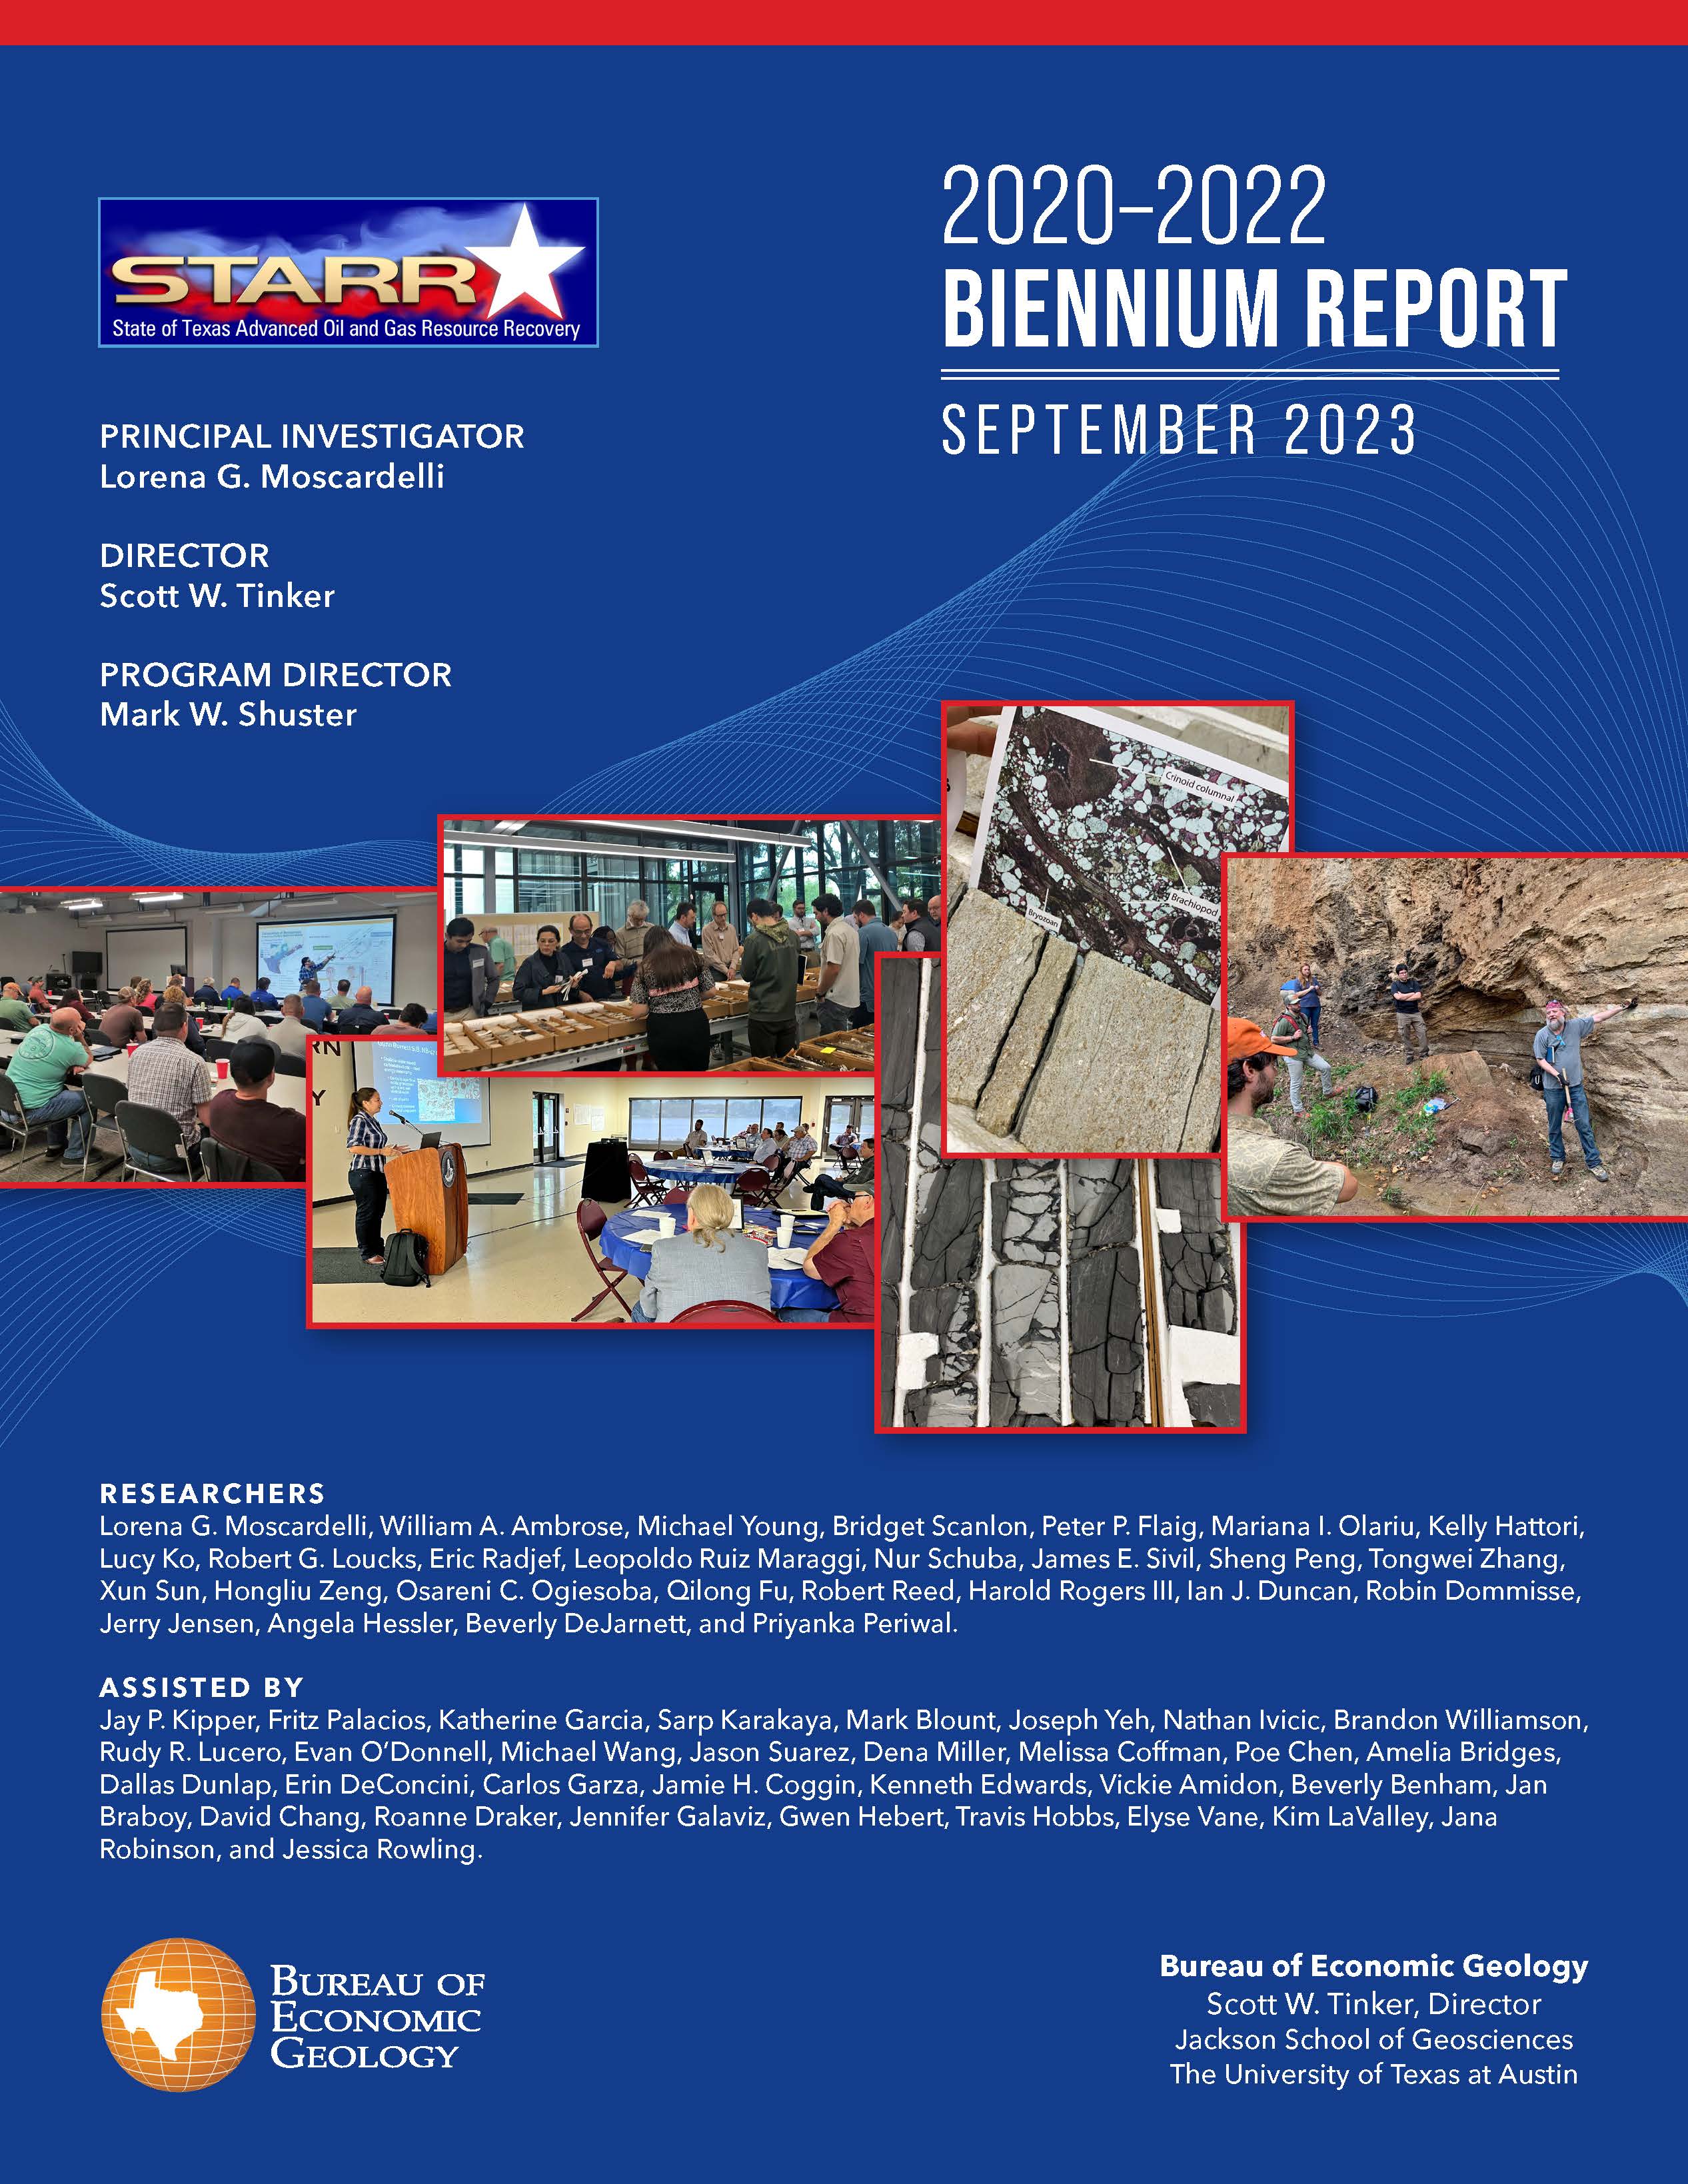 STARR Biennium Report